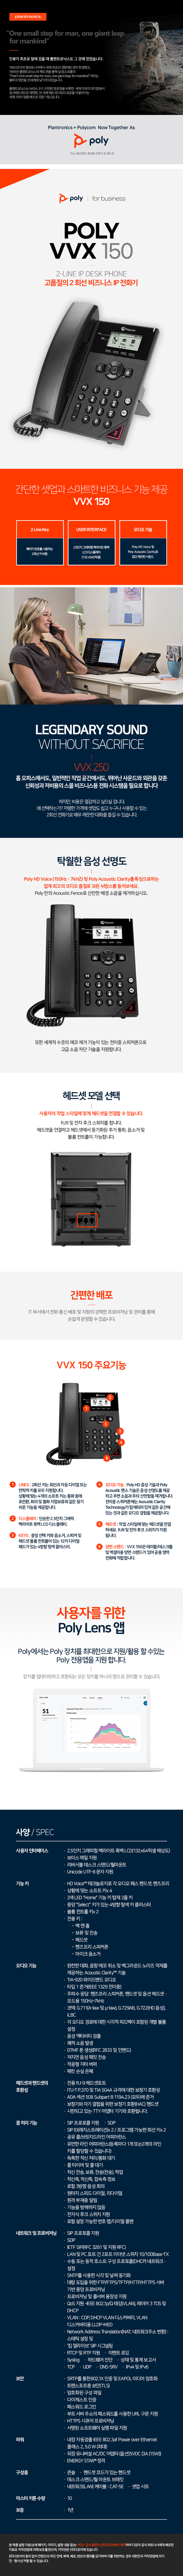 VVX-150_162337.jpg